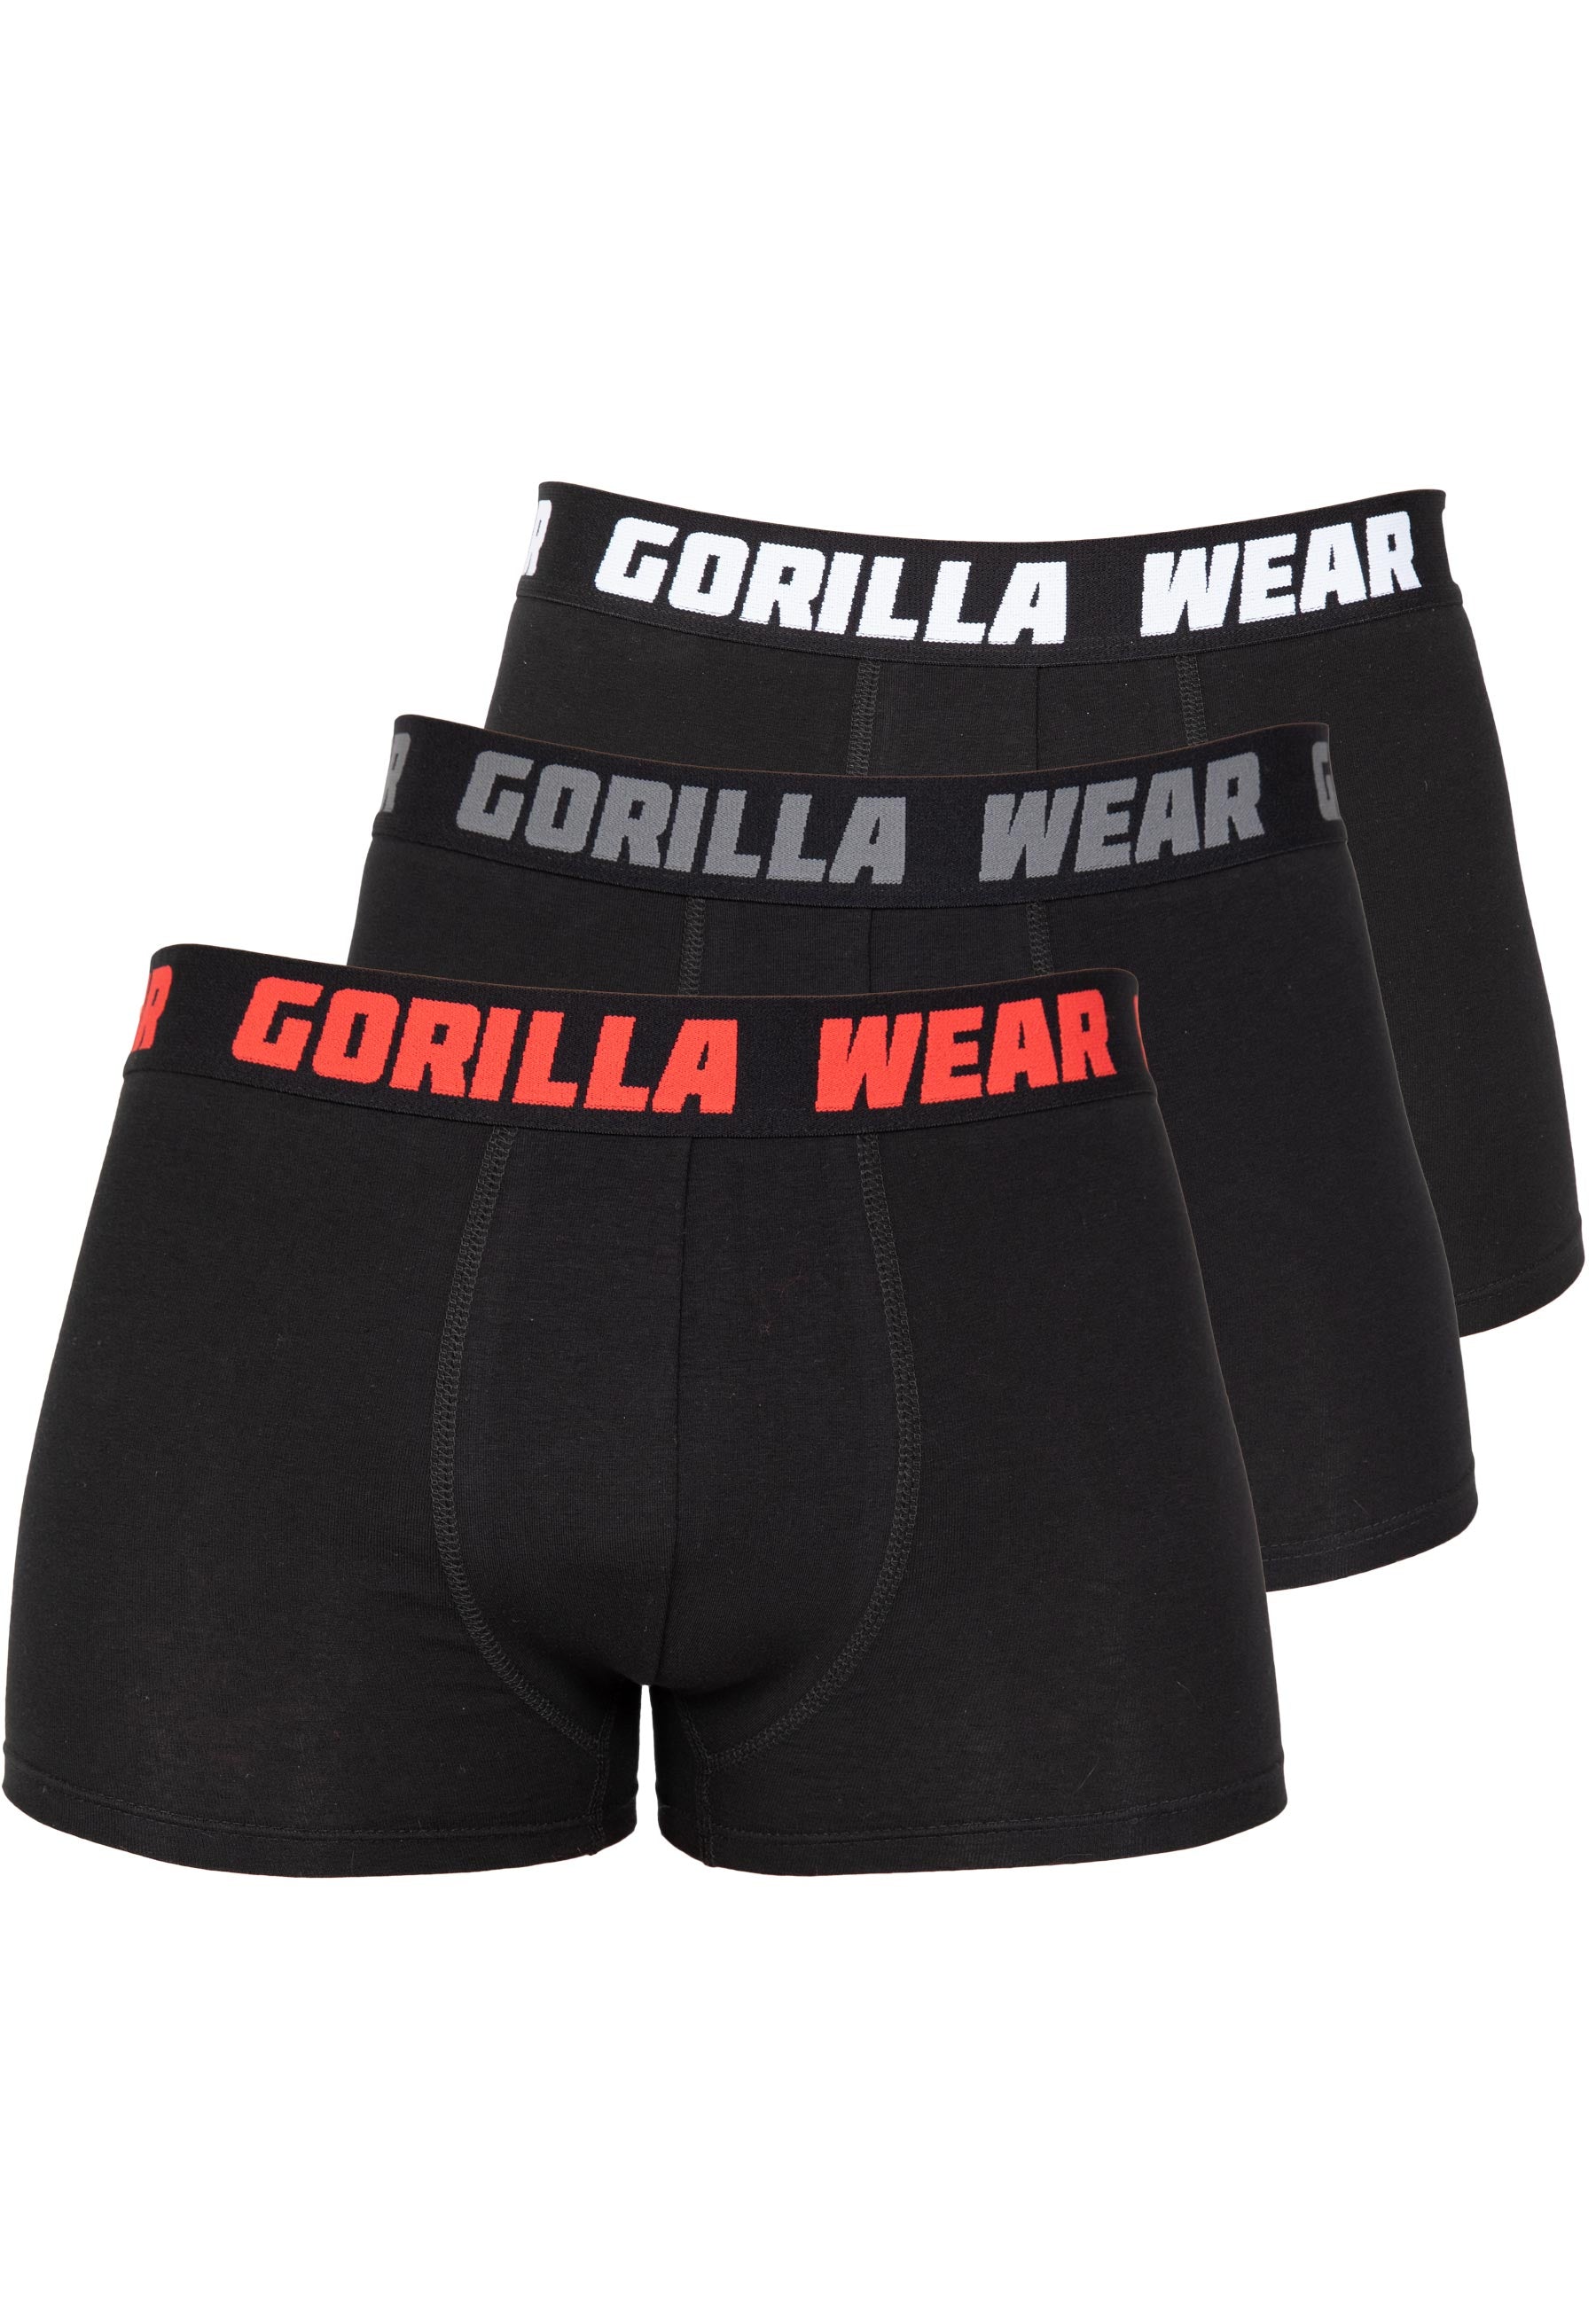 Gorilla Wear Boxer Shorts 3- Pack